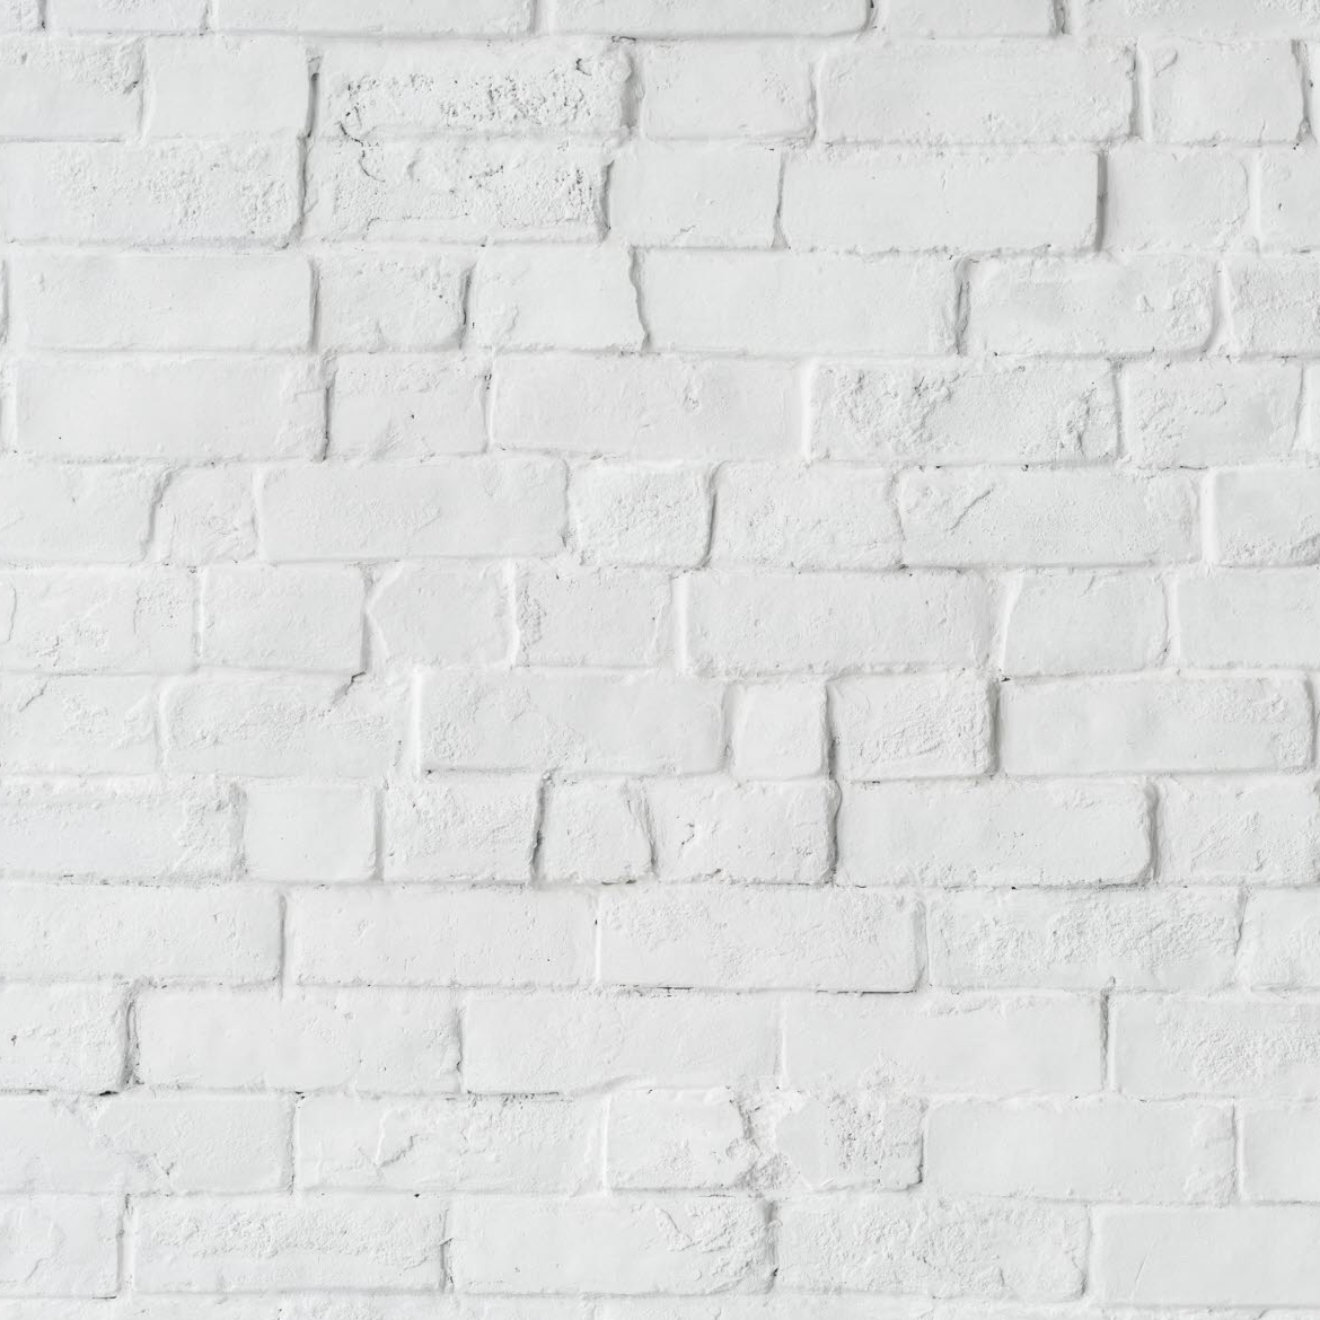 bricks-brickwall-brickwork-pexels.jpg